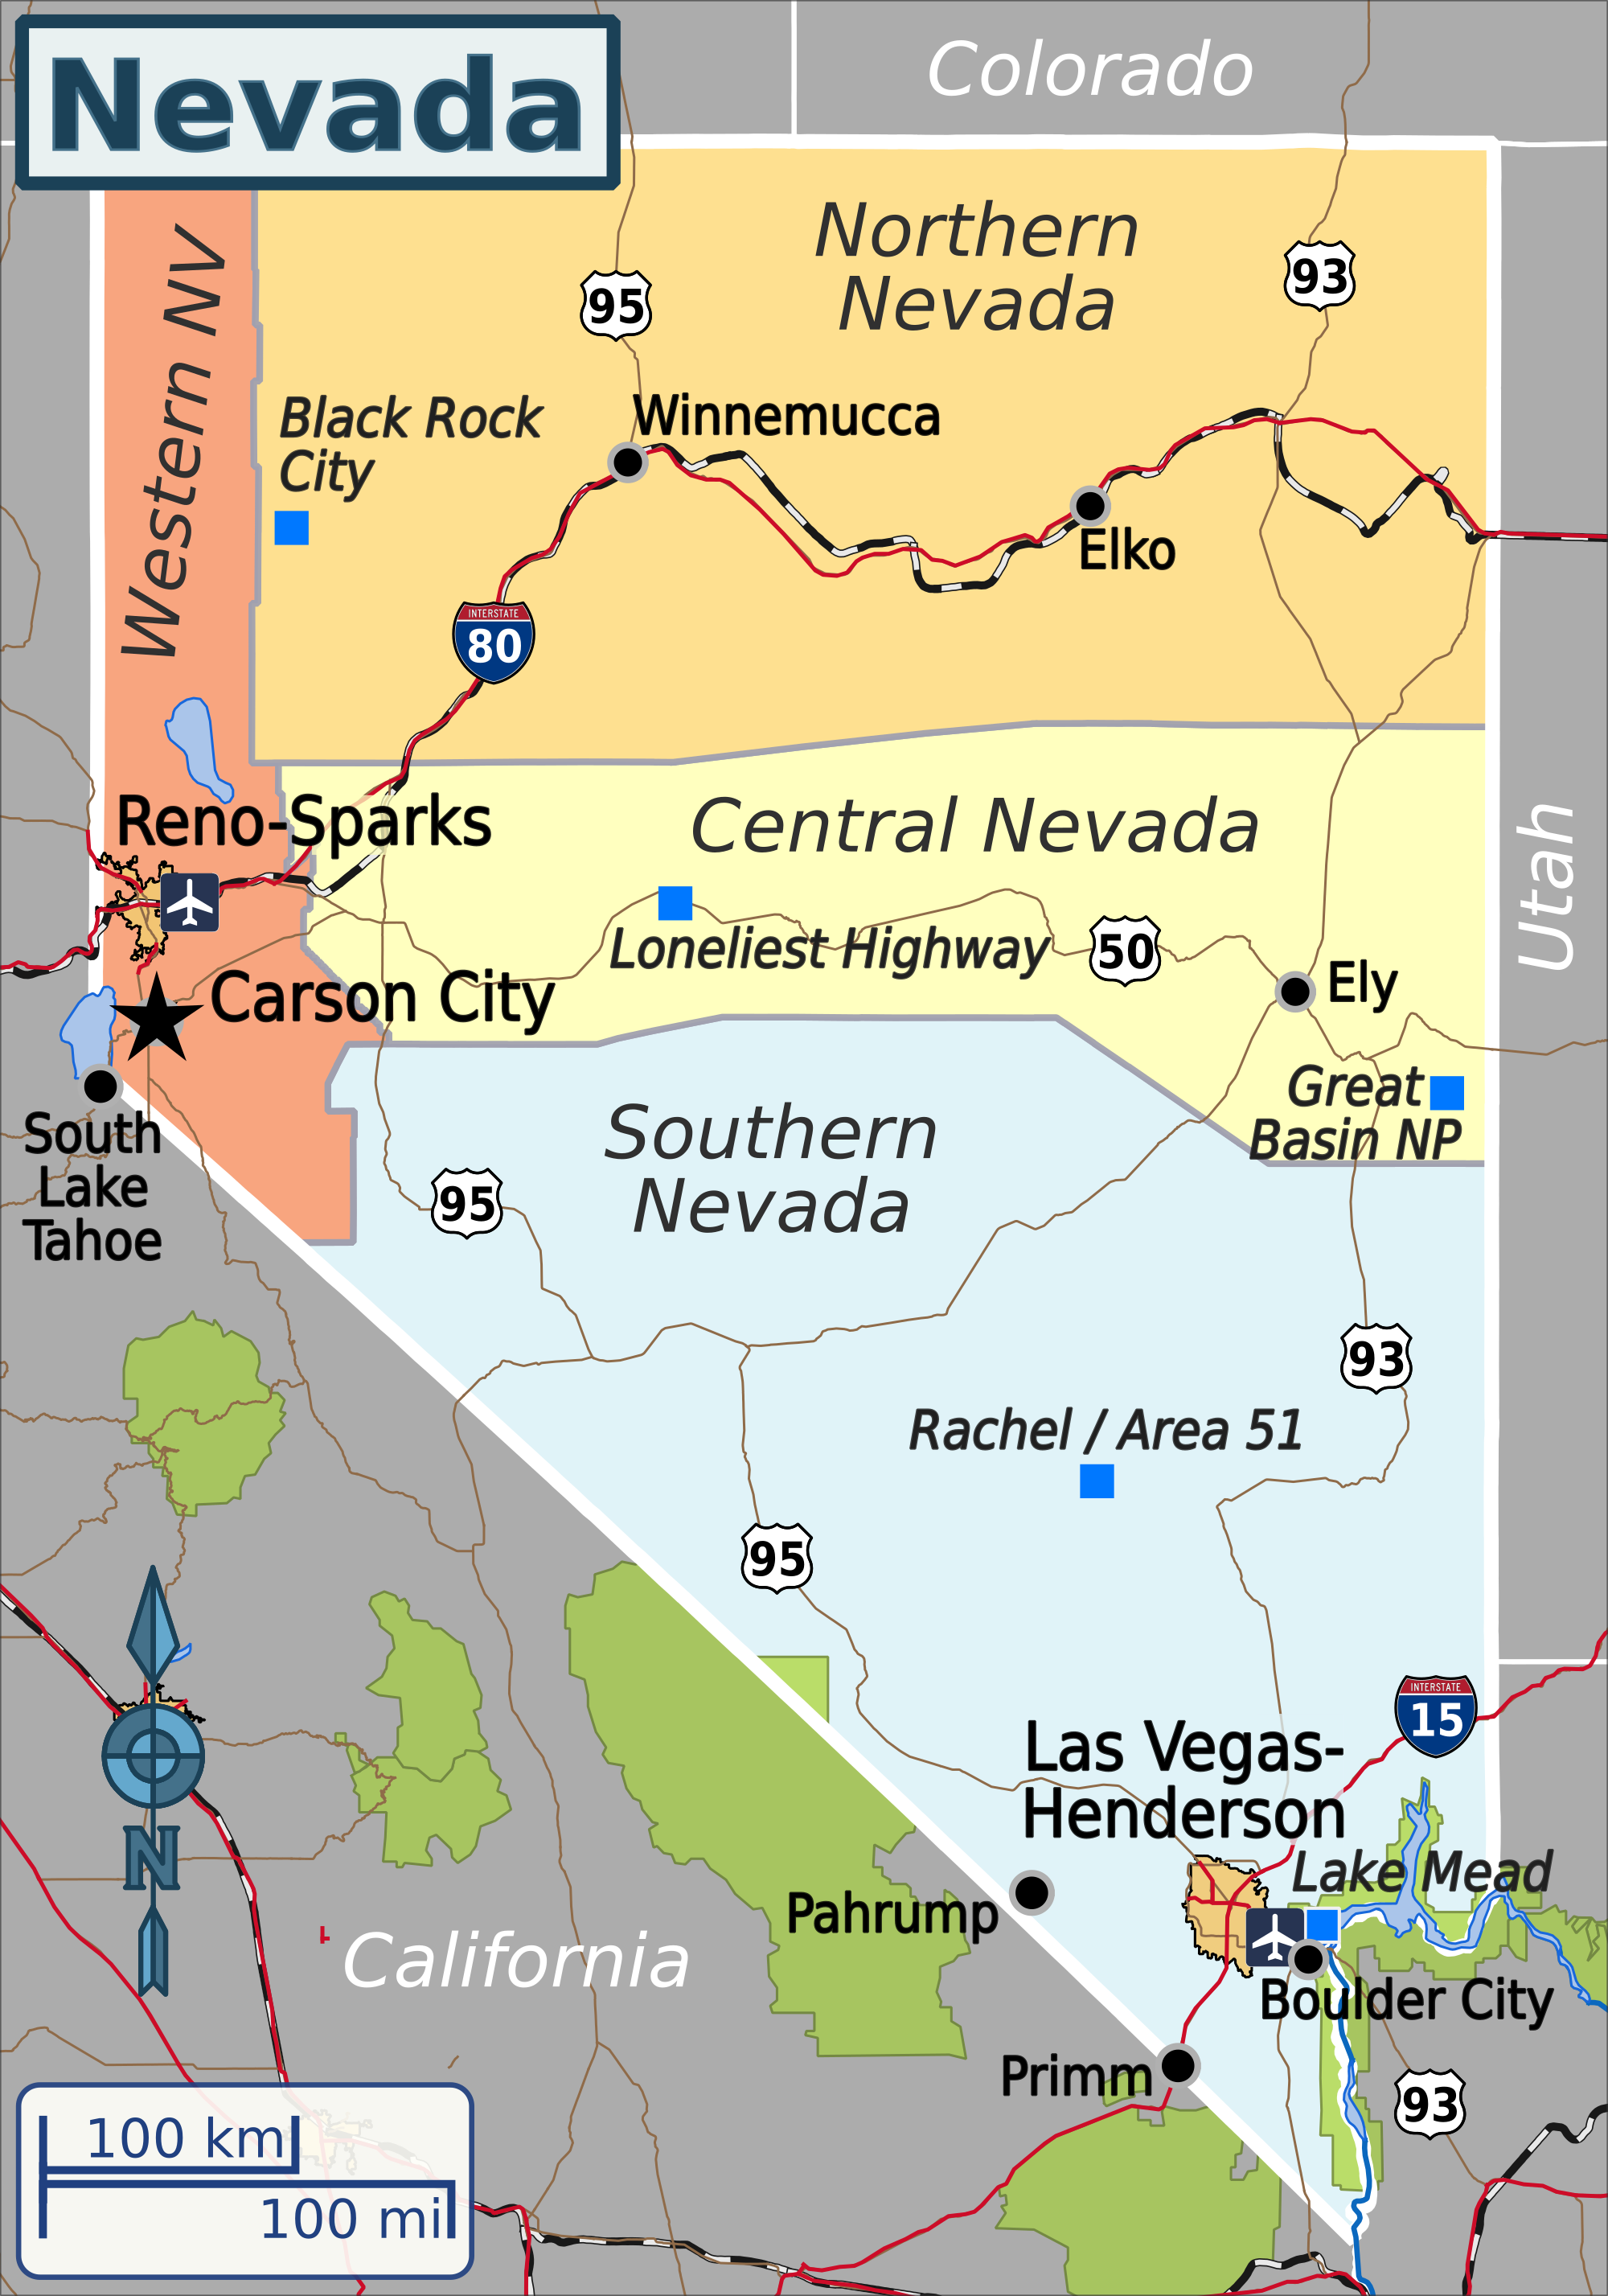 USA: Nevada – SPG Family Adventure Network